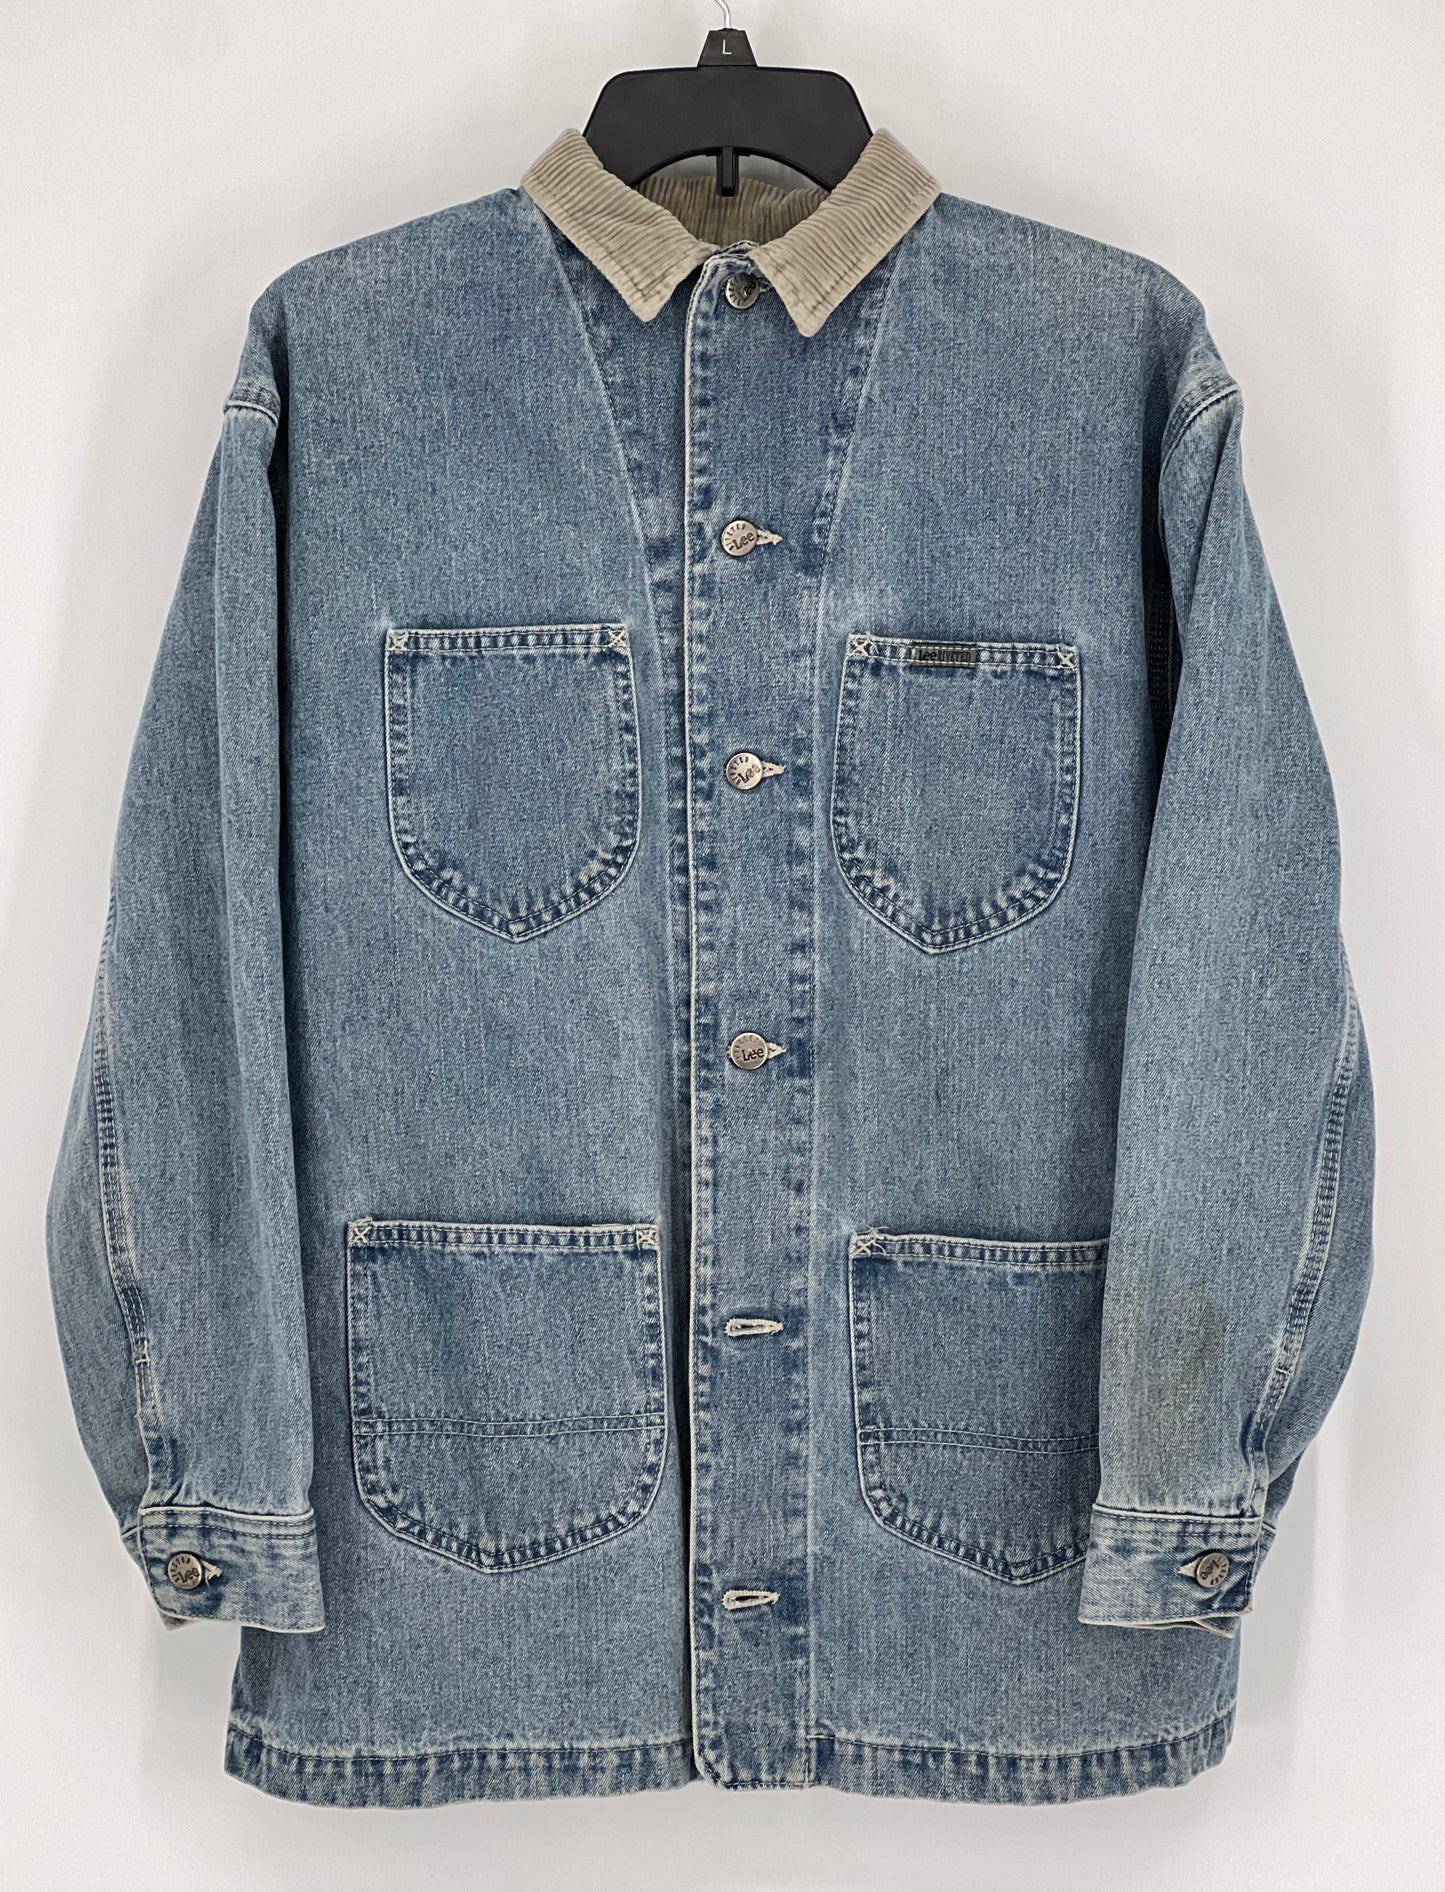 Vintage Lee Riveted Denim Jacket Gray Corduroy Collar Sz: L